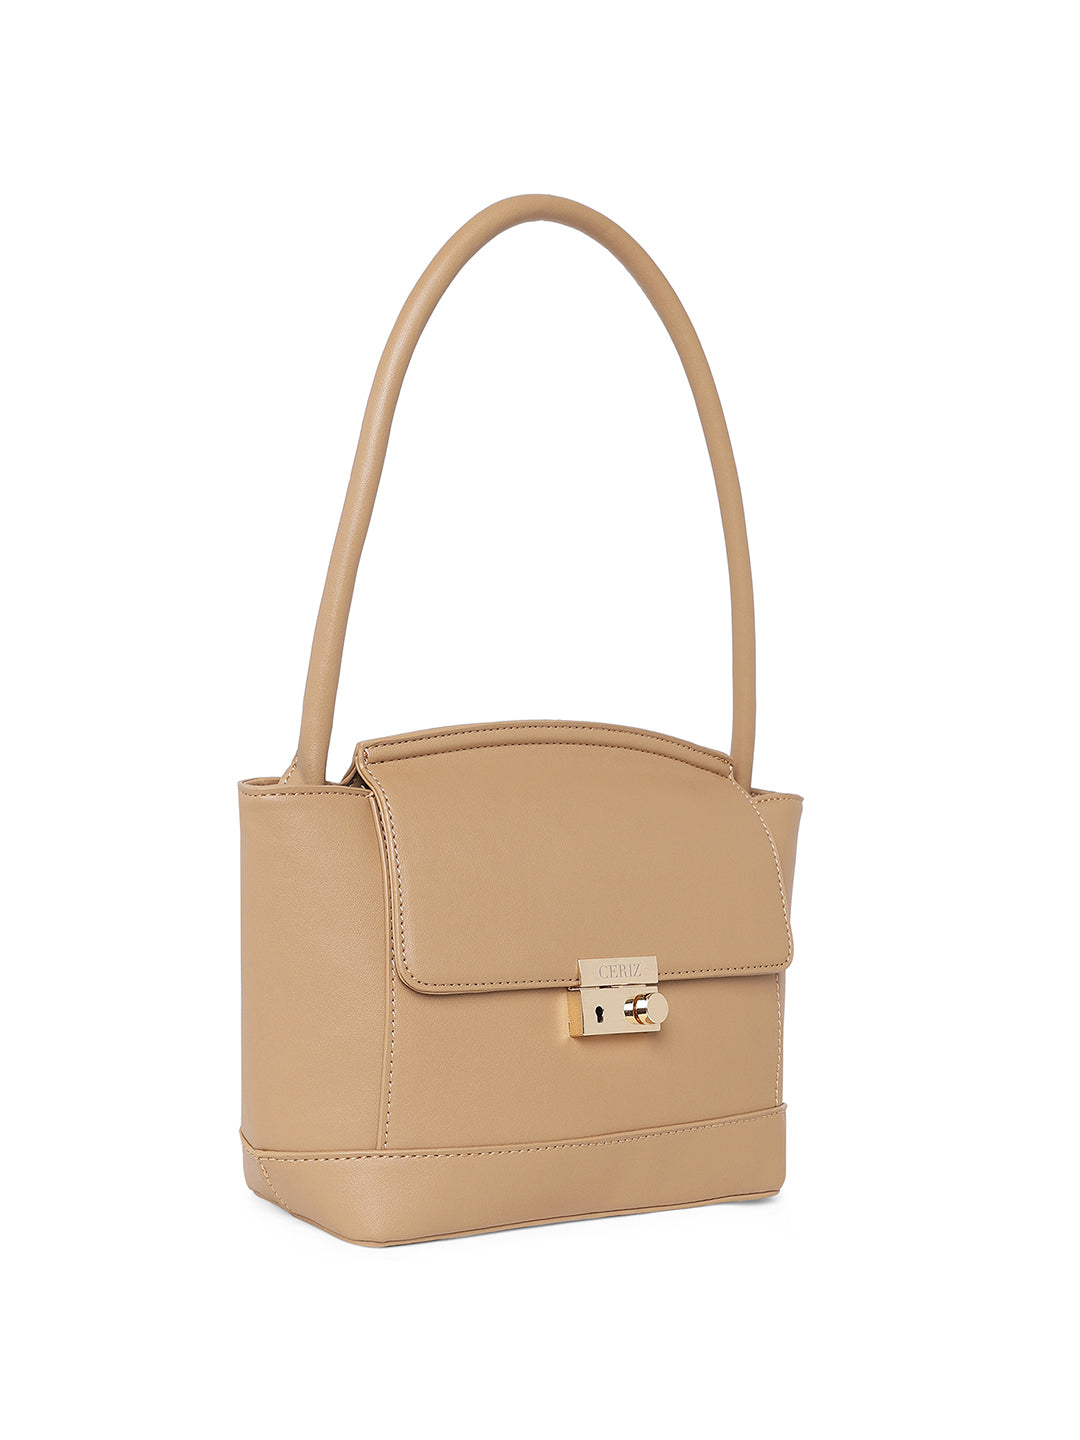 Buy Ceriz Women's Fashionable Sling Bag at Amazon.in